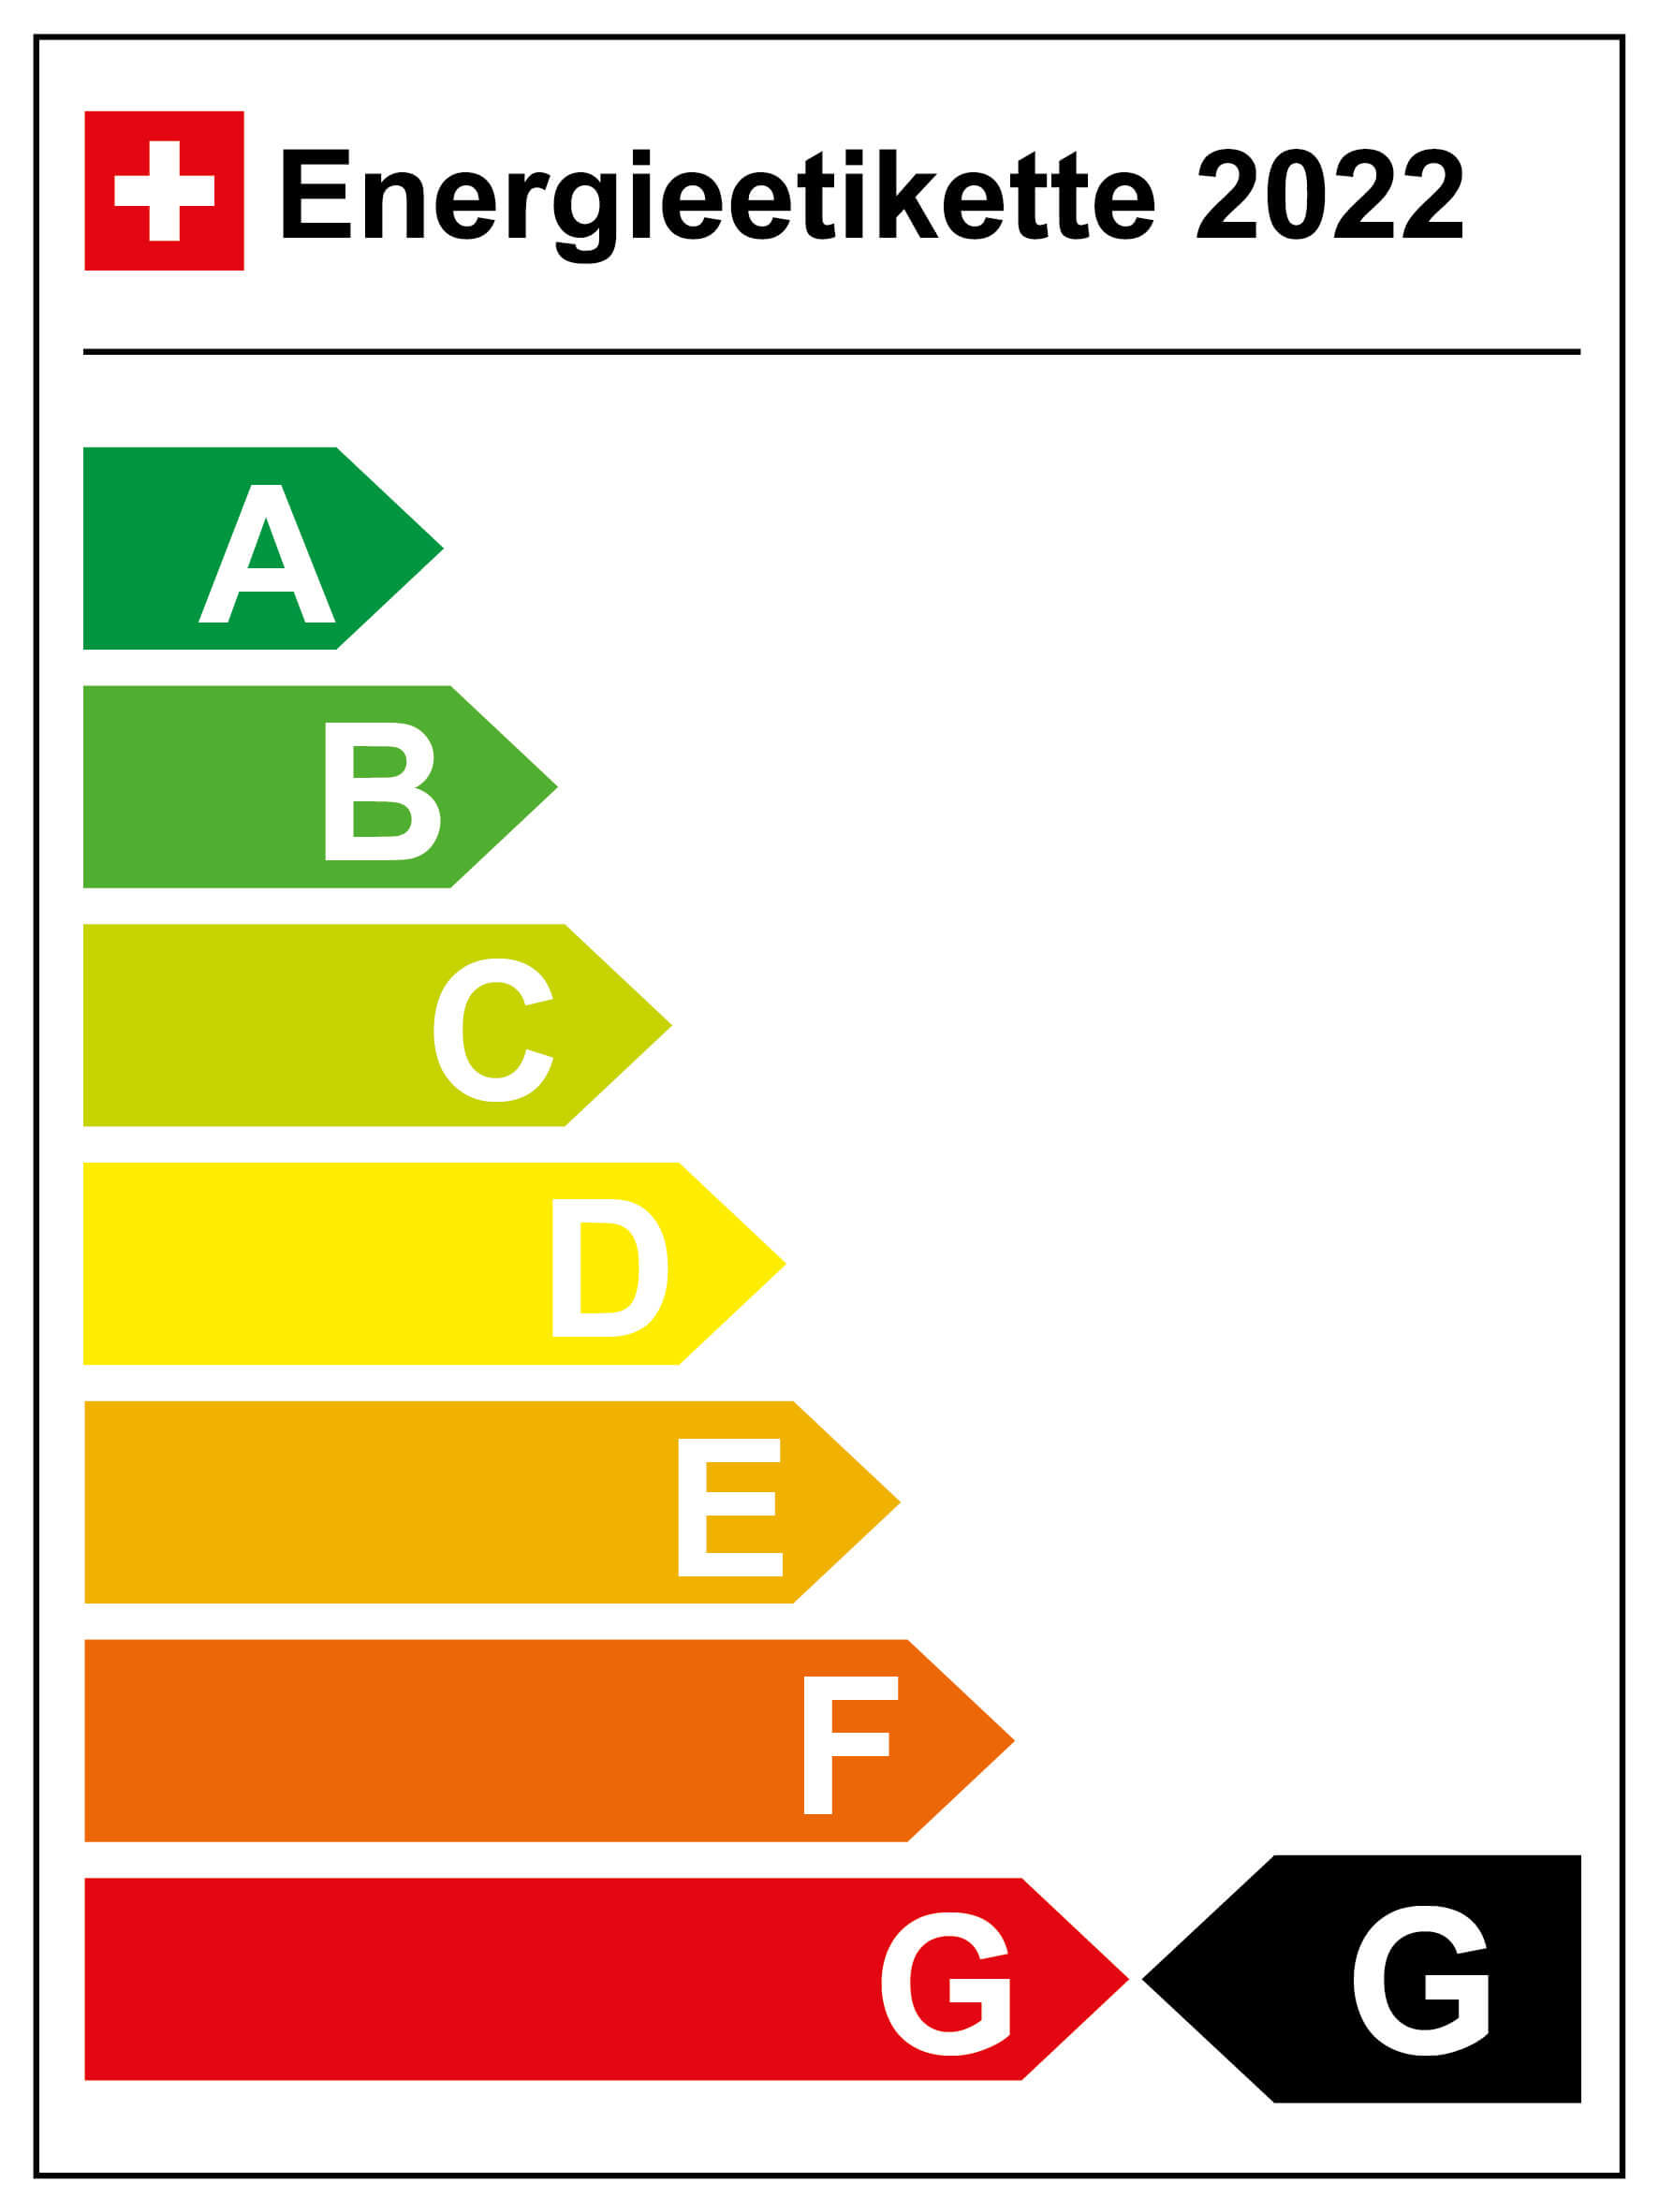 Energieeffizienz-Kategorie: G